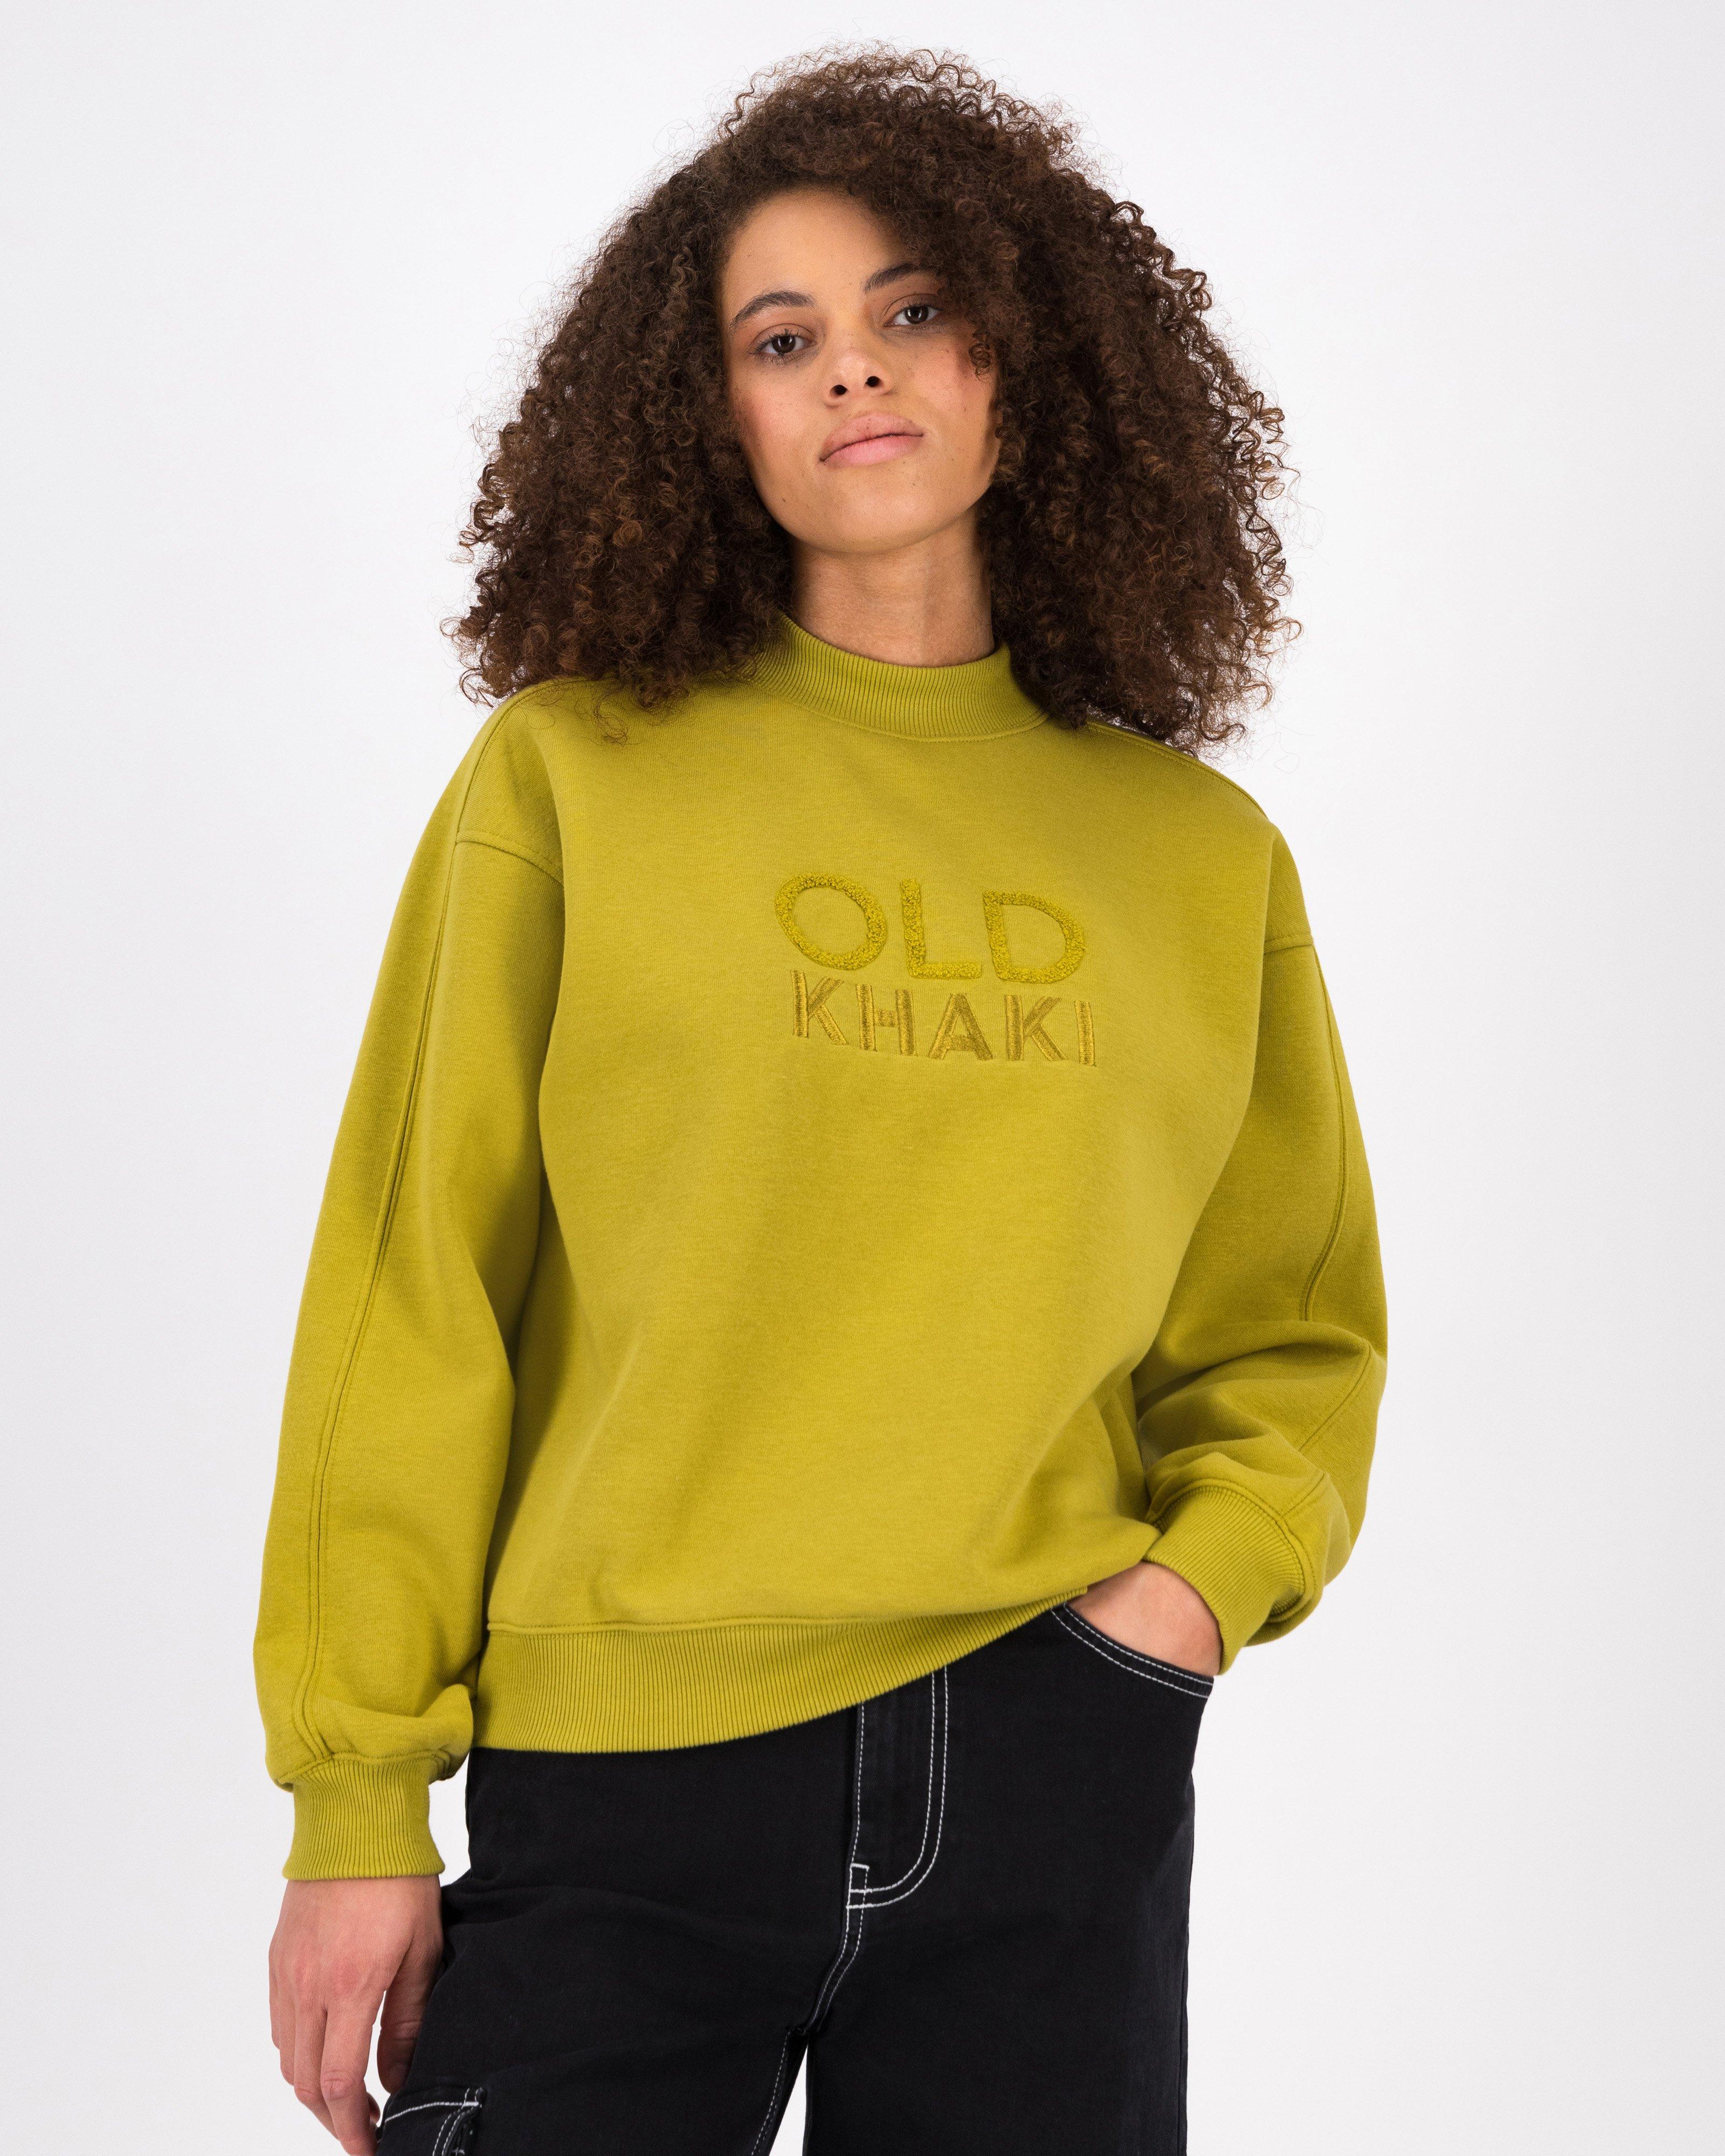 Old Khaki Women’s Lana Turtle Neck Top -  Chartreuse